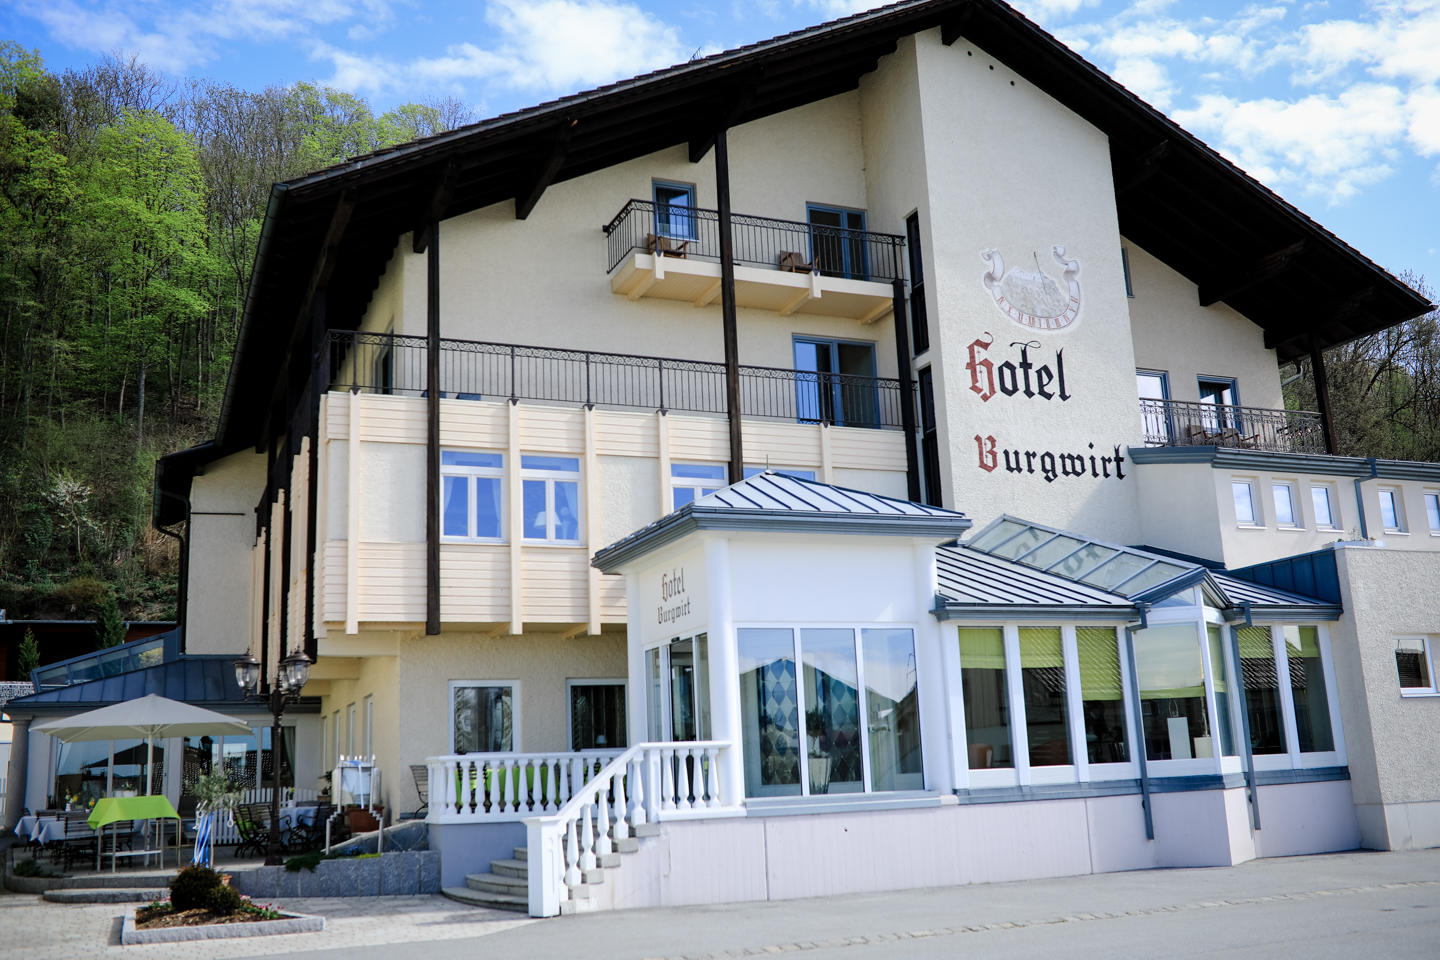 Bilder Hotel Burgwirt GmbH